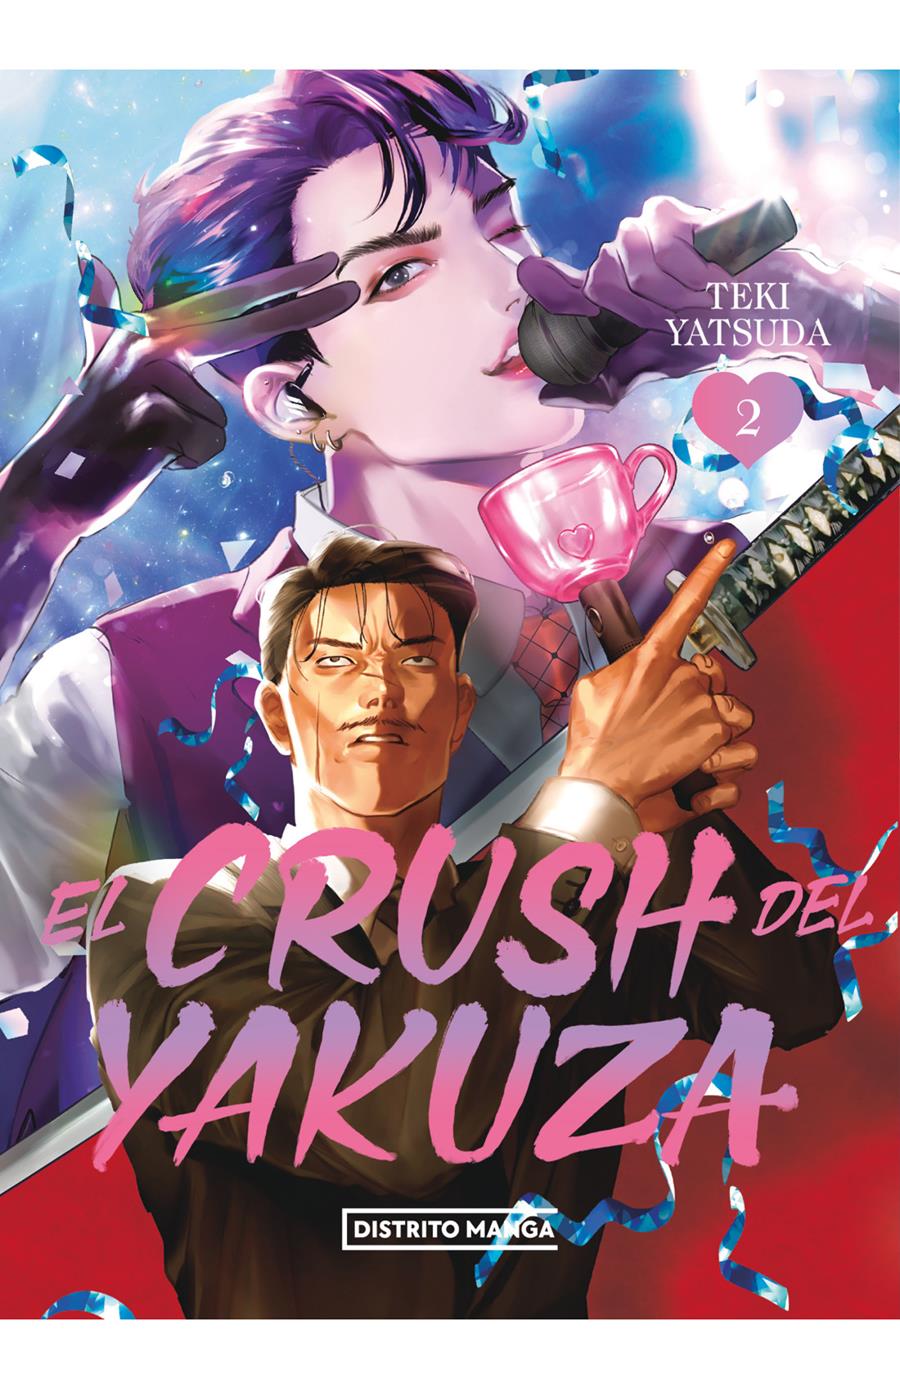 El crush del yakuza 02 | N0324-OTED12 | Teki Yatsuda | Terra de Còmic - Tu tienda de cómics online especializada en cómics, manga y merchandising